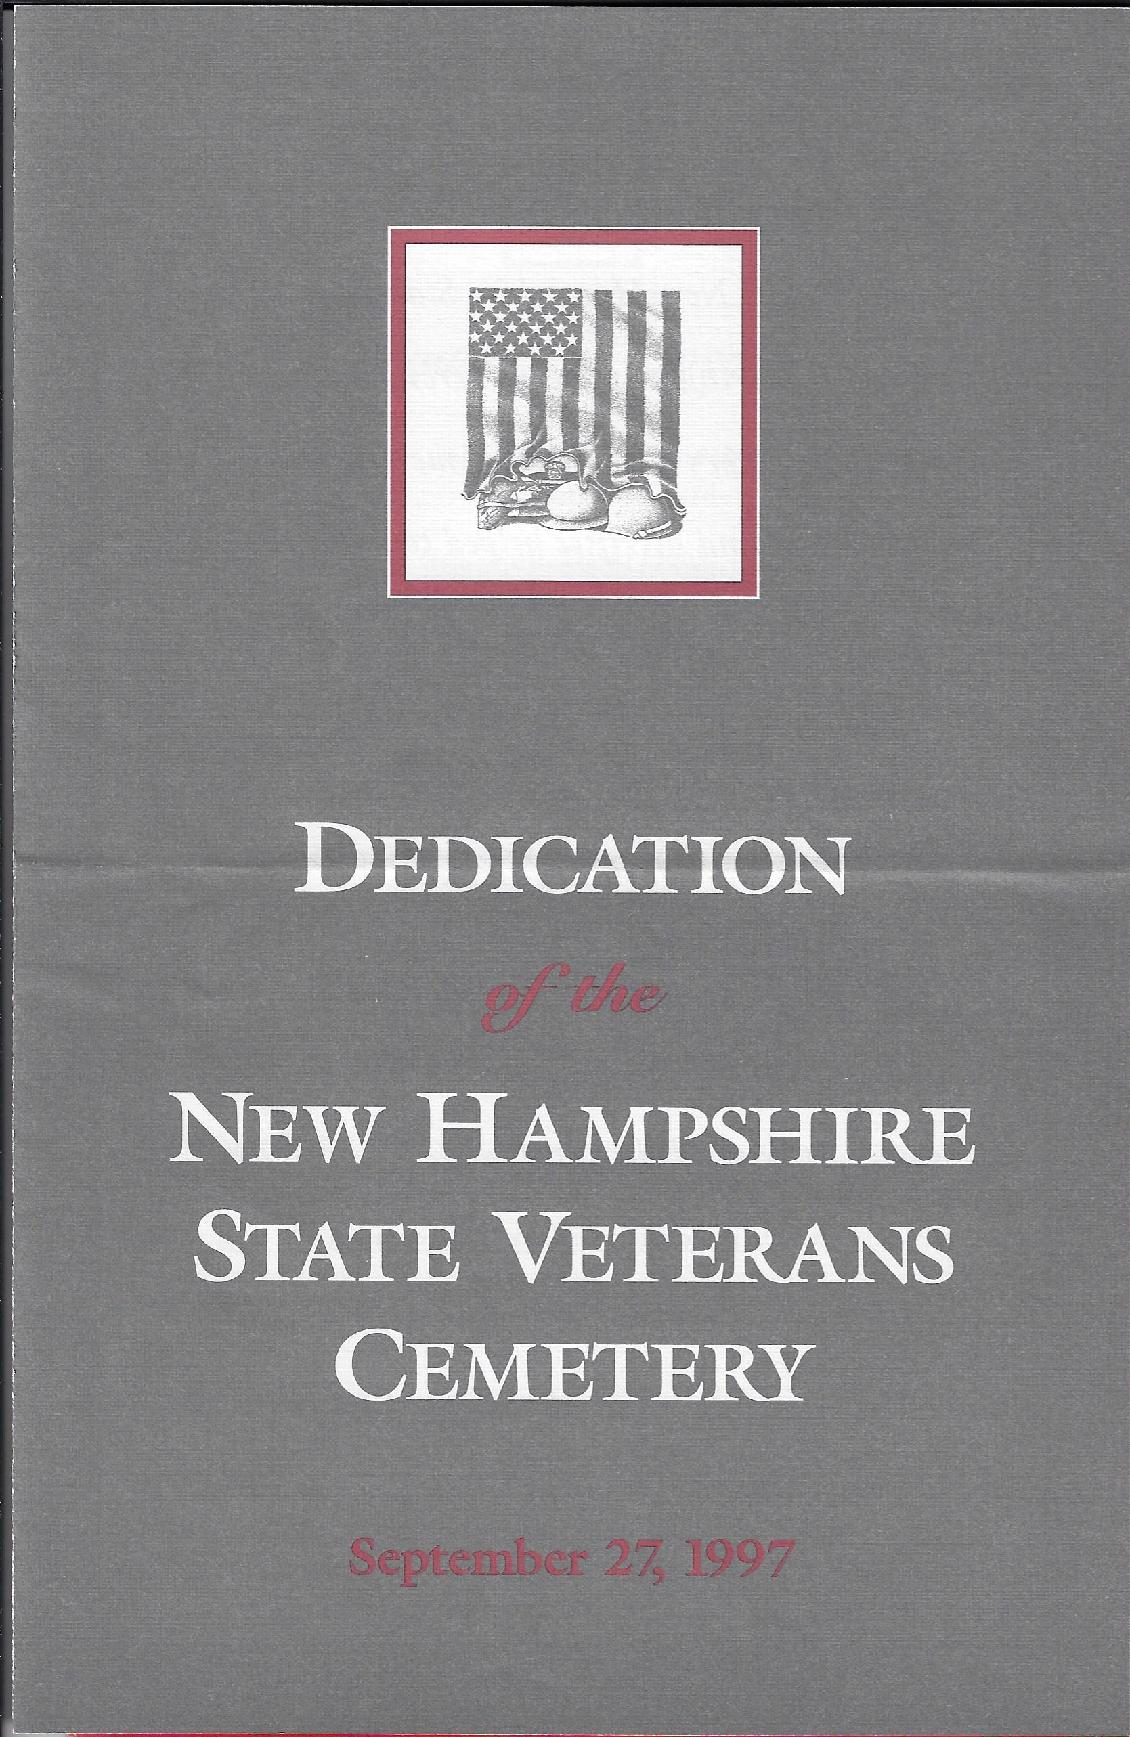 Program of the NH State Veterans Cemetery Dedication Ceremony September 27 1997